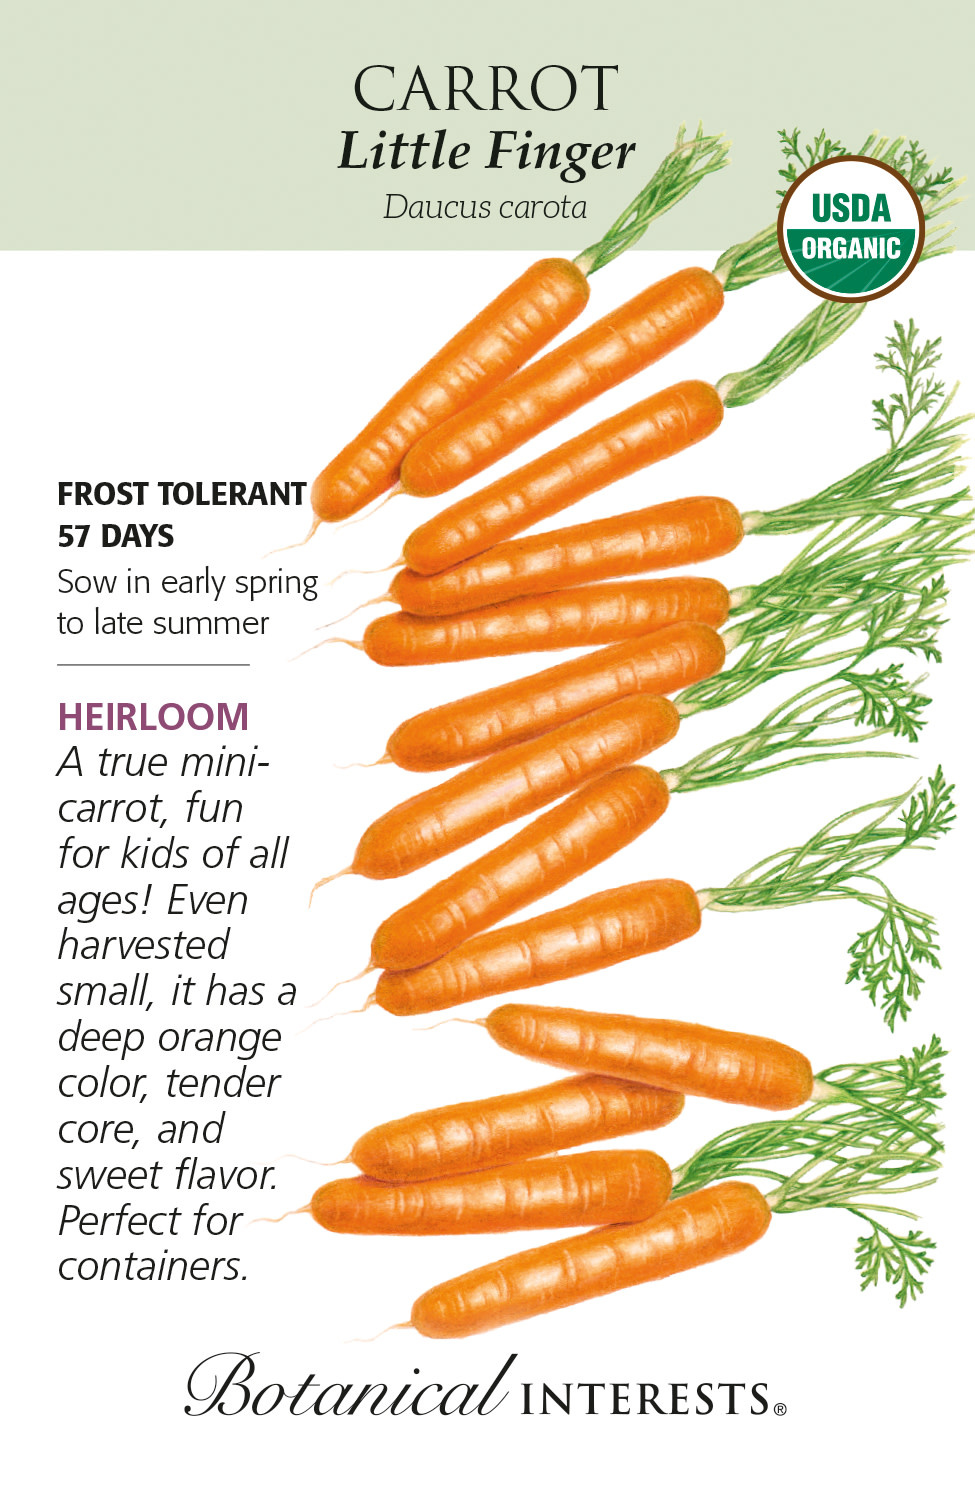 Seed Veg Carrot Little Finger Organic Heirloom - Daucus carota sativus